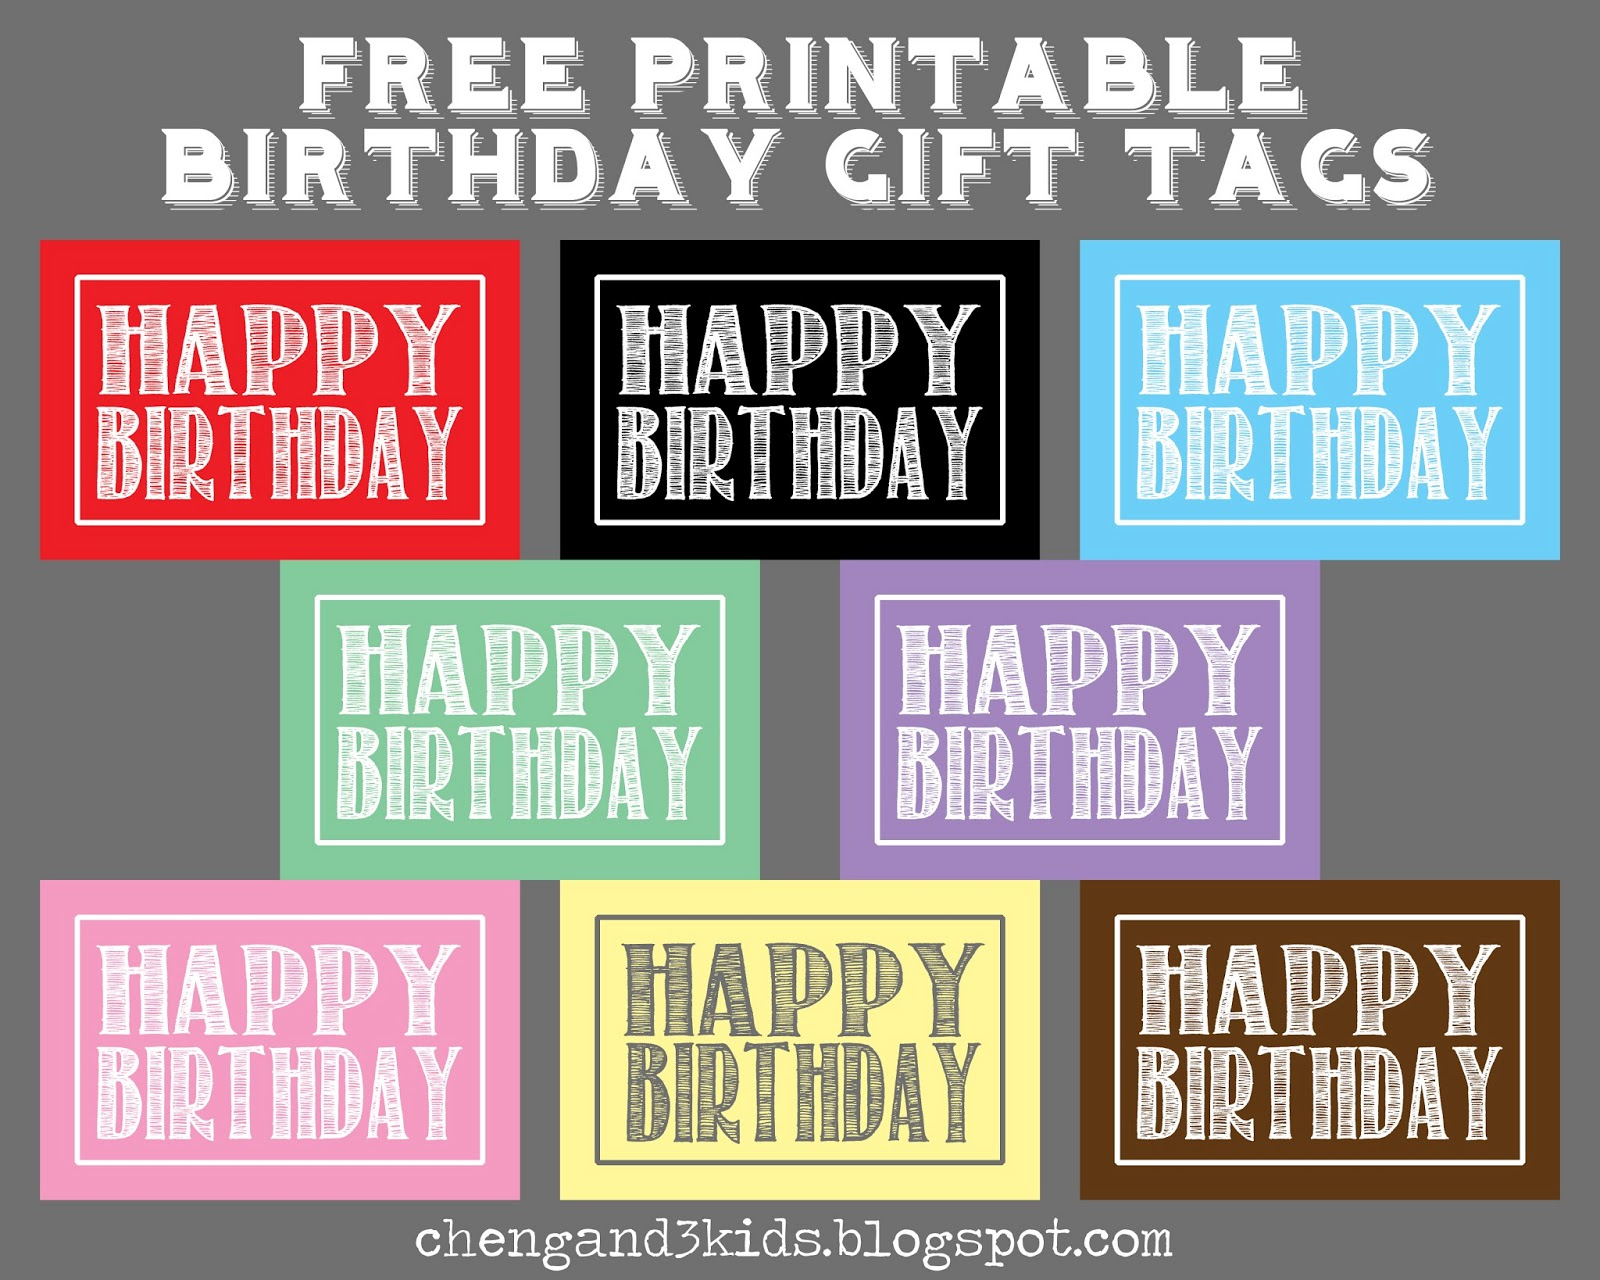 Cheng And 3 Kids: Free Printable Birthday Gift Tags - Free Printable Birthday Tags